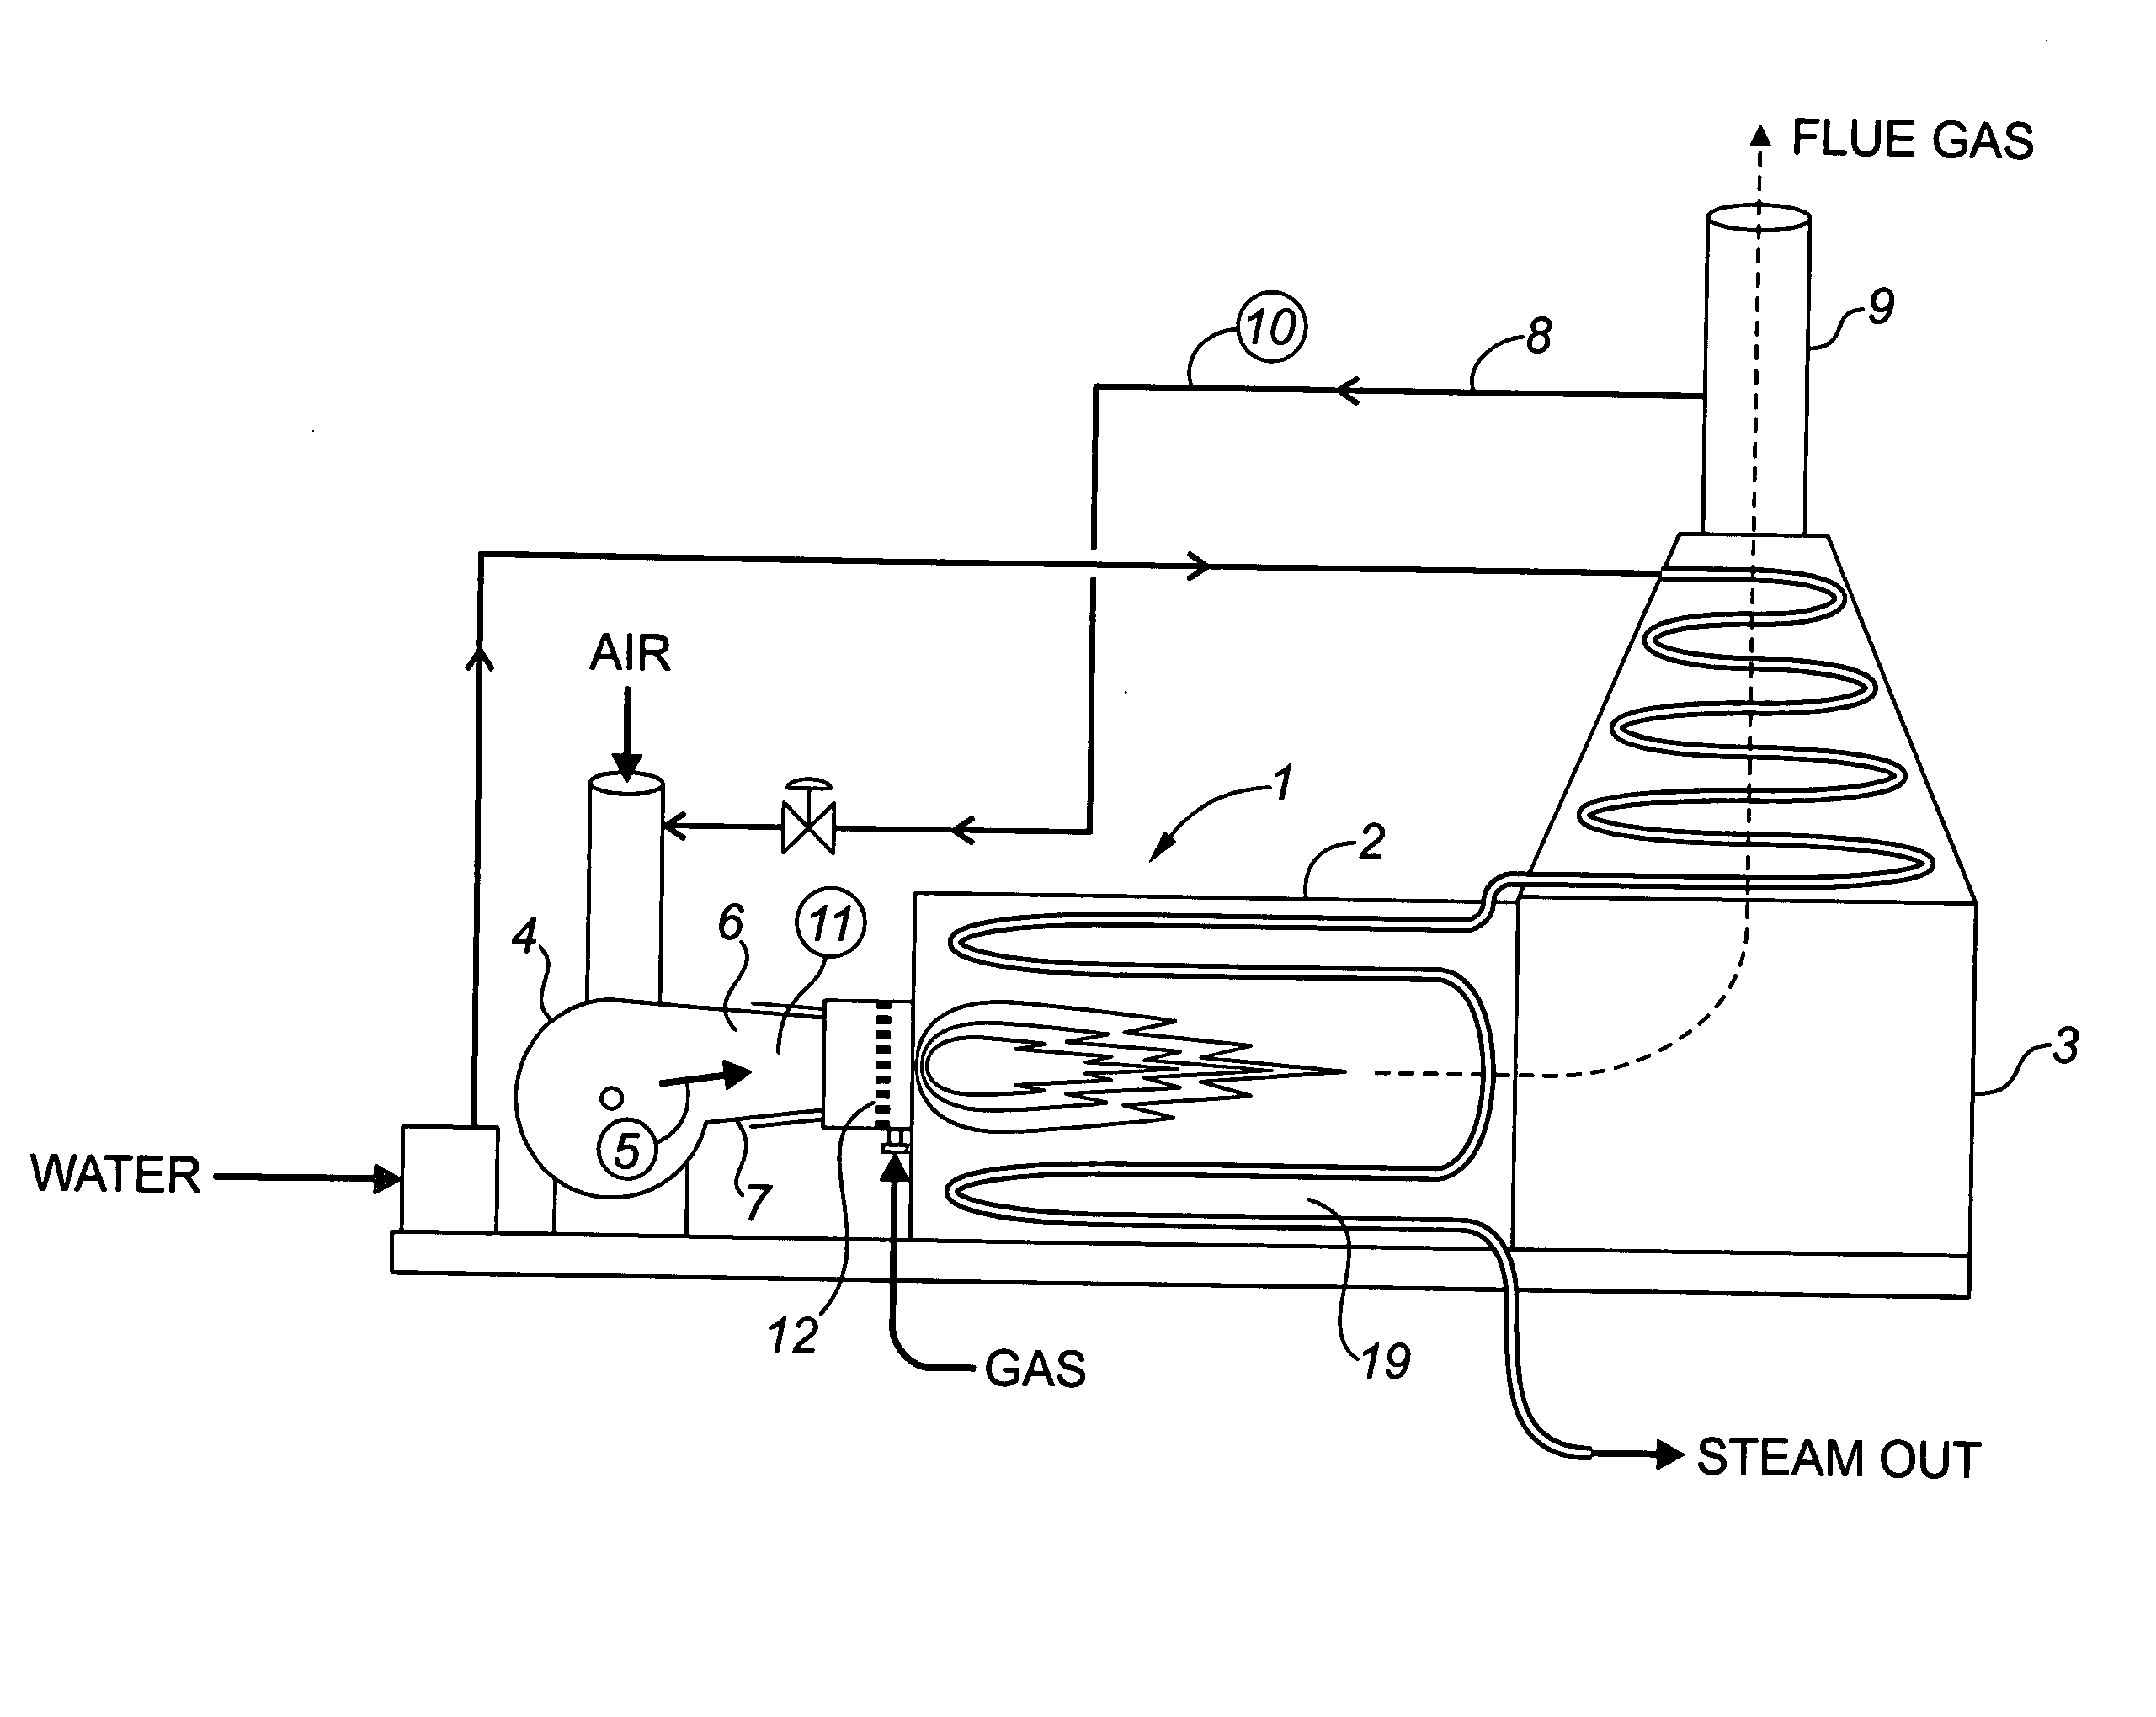 Diffuser plate for boiler burner feed assembly